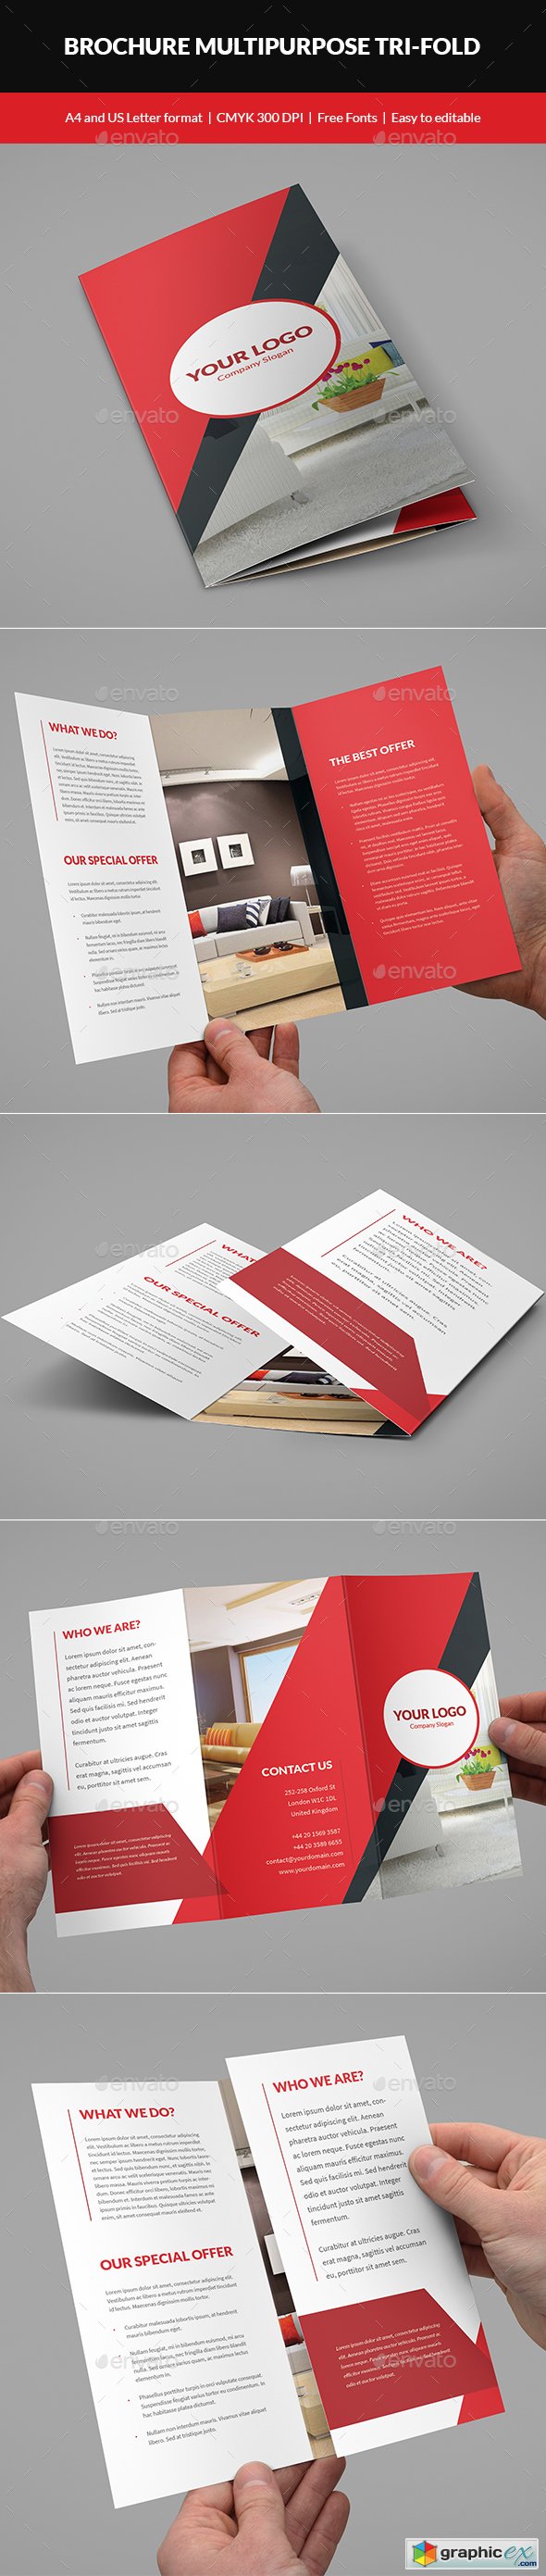 Brochure Multipurpose Tri-Fold